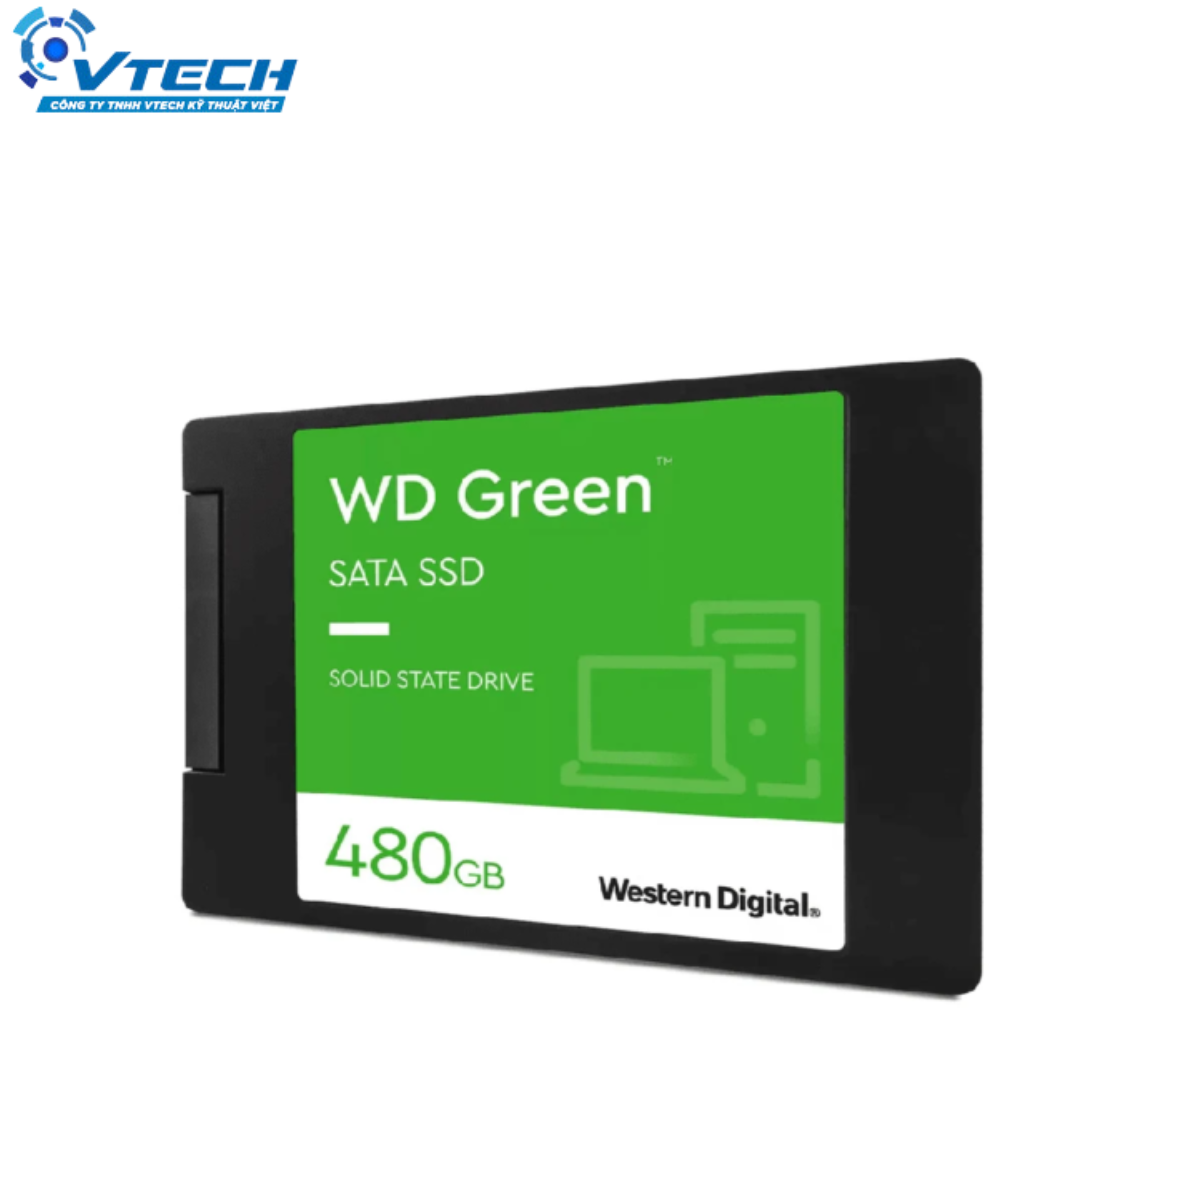 2953 - SSD Western Digital Green Sata III 480GB - Chính hãng - 5